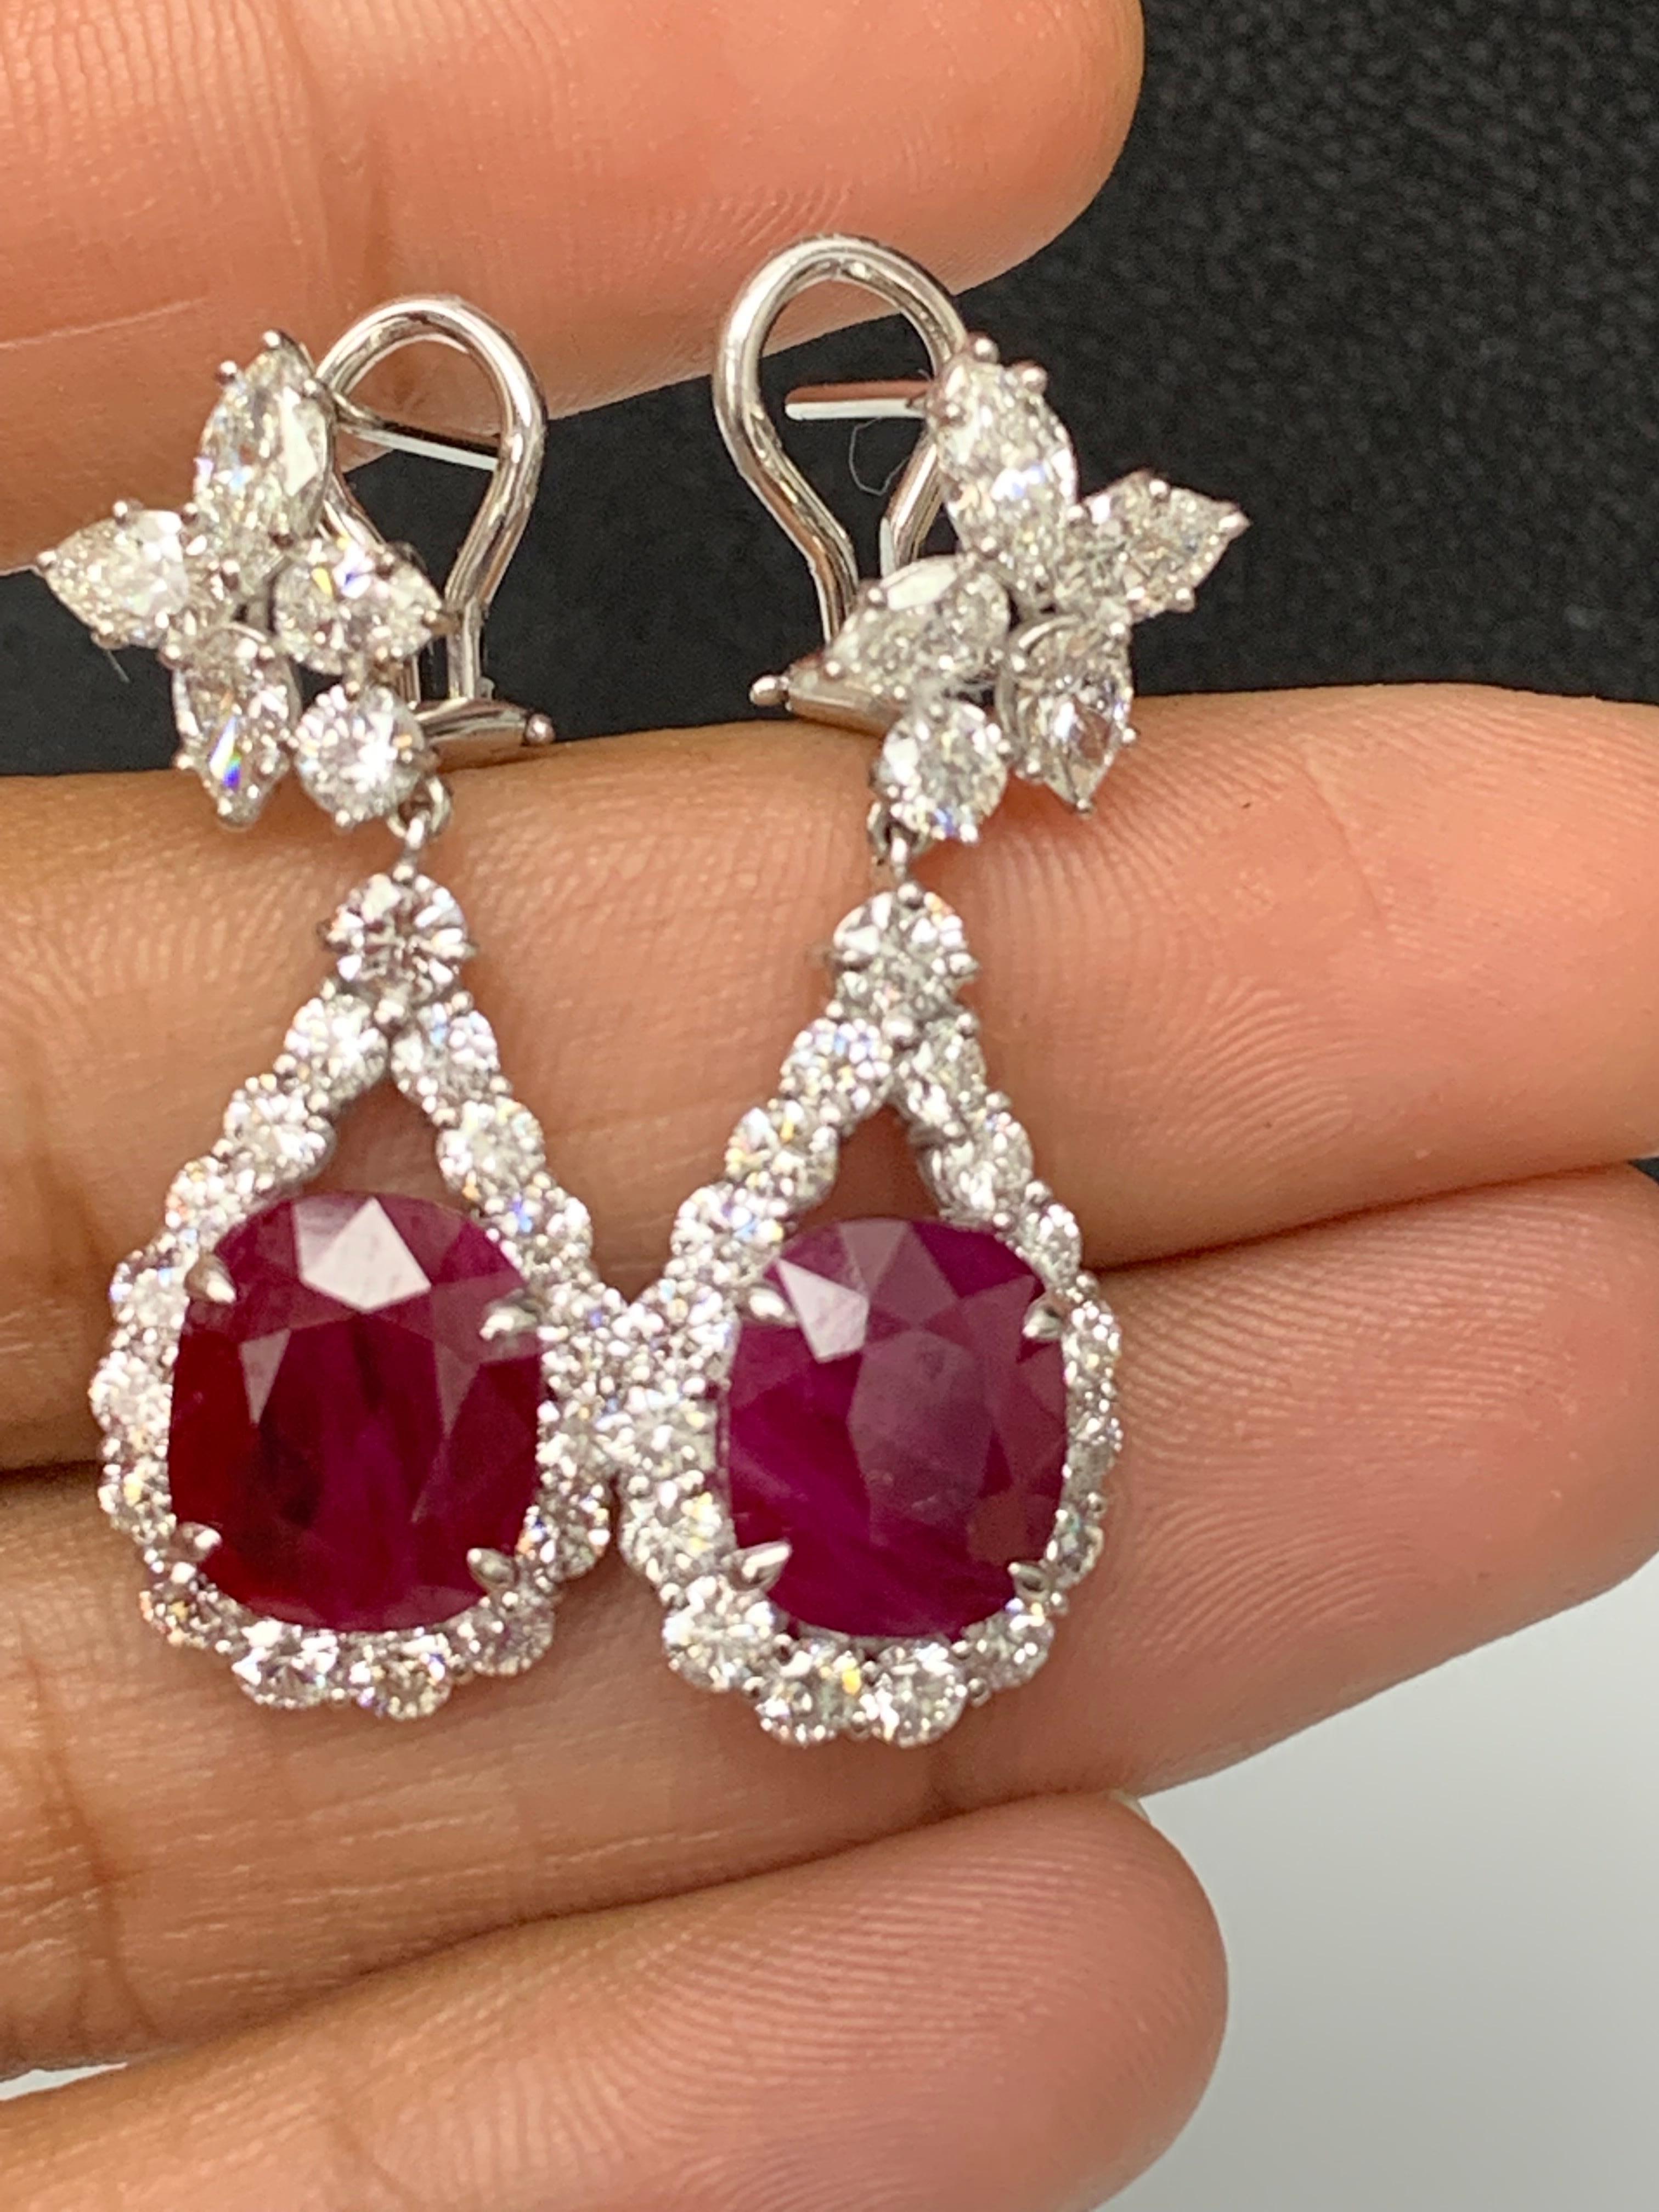 Certified 10.18 Carat Burma Ruby and Diamond Drop Earrings in 18K White Gold For Sale 3